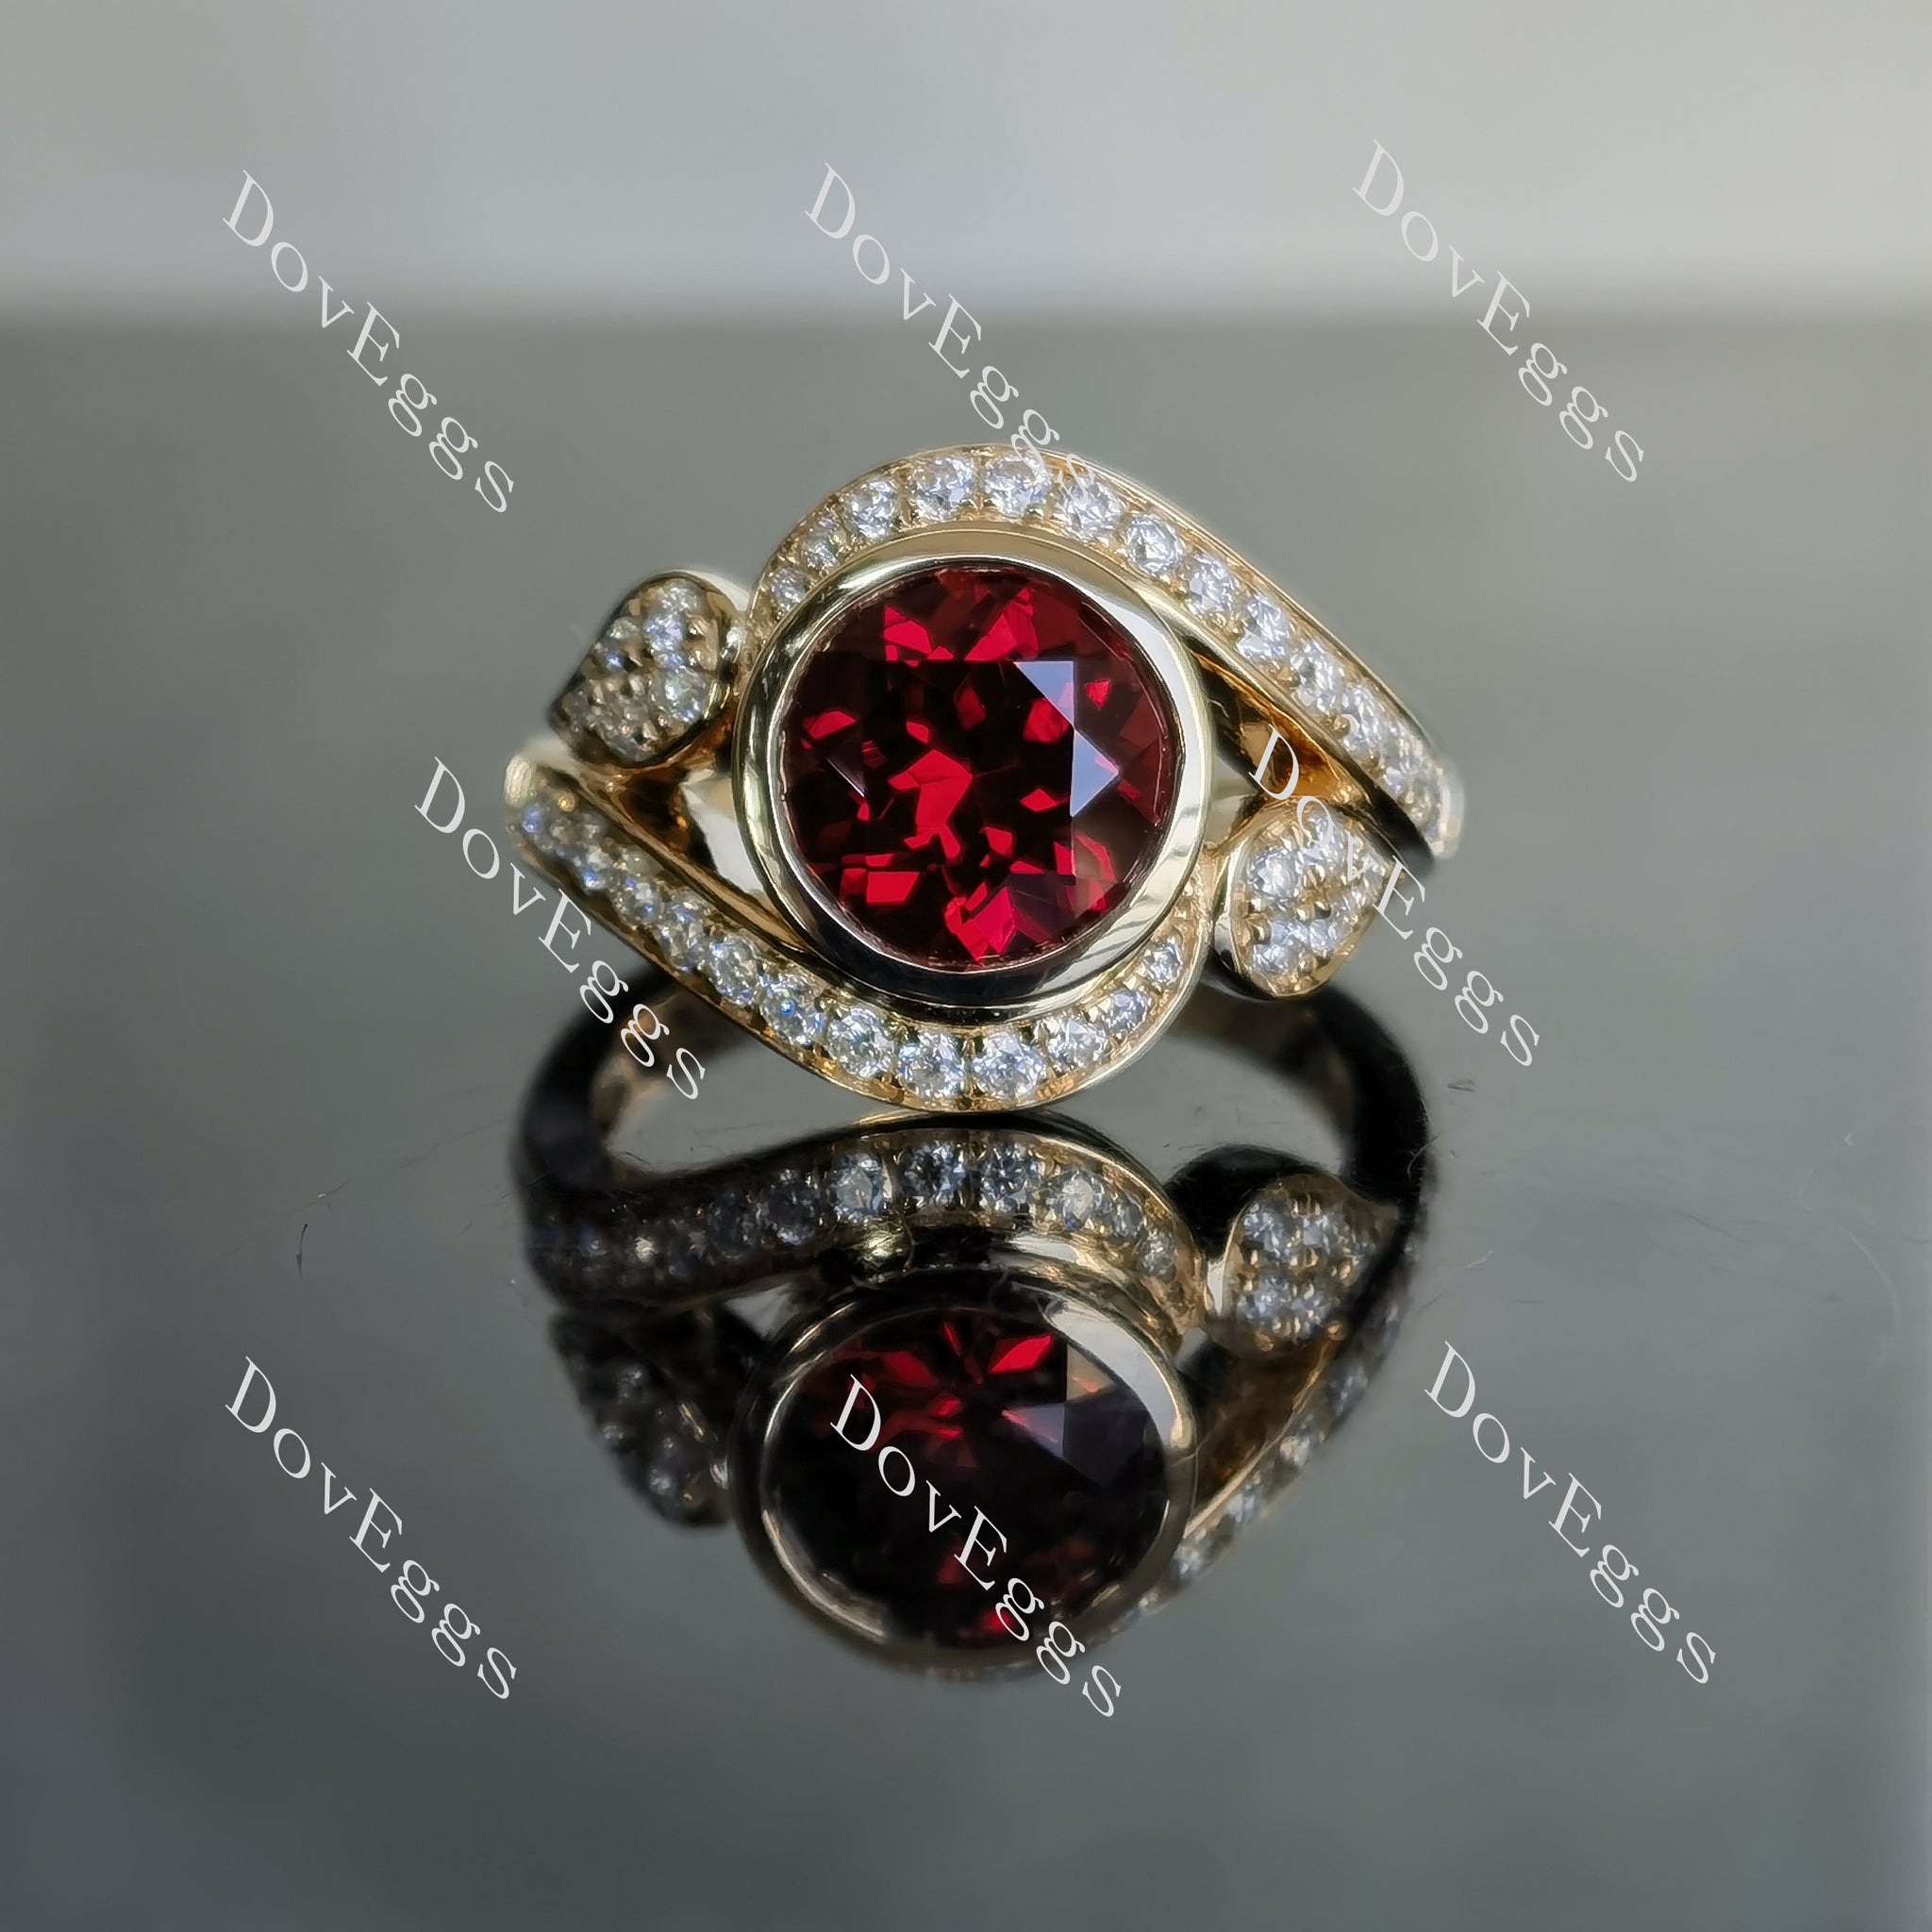 DovEggs round Astro bezel colored gem engagement ring